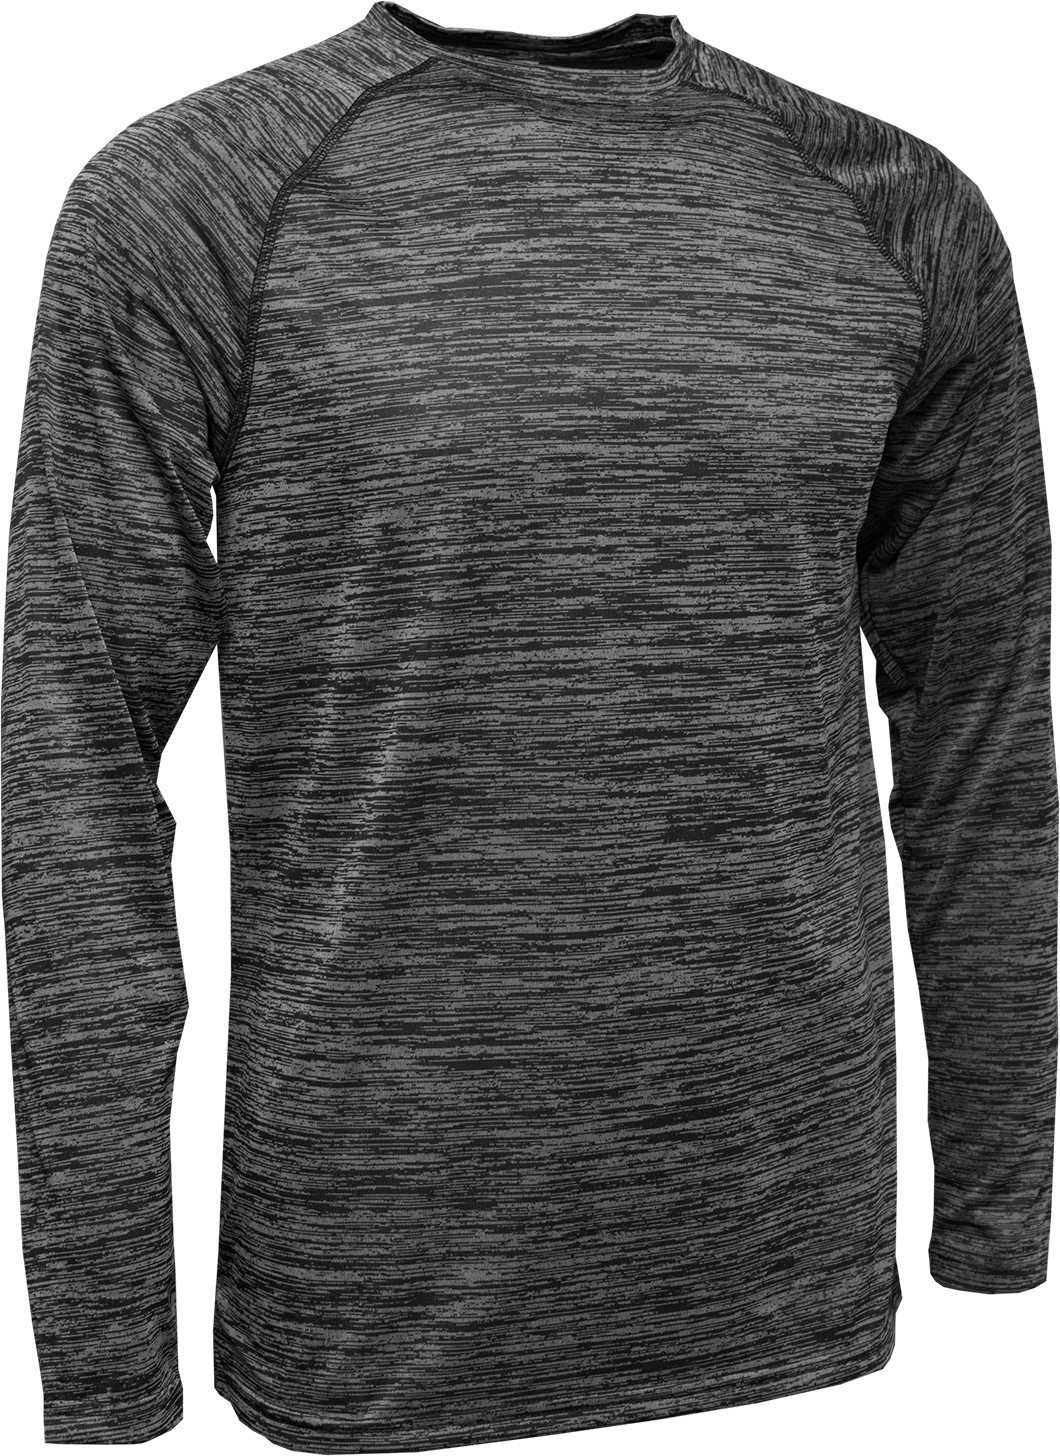 BAW Athletic Wear DT86 - Men's Dry-Tek Long Sleeve Shirt $9.75 - T